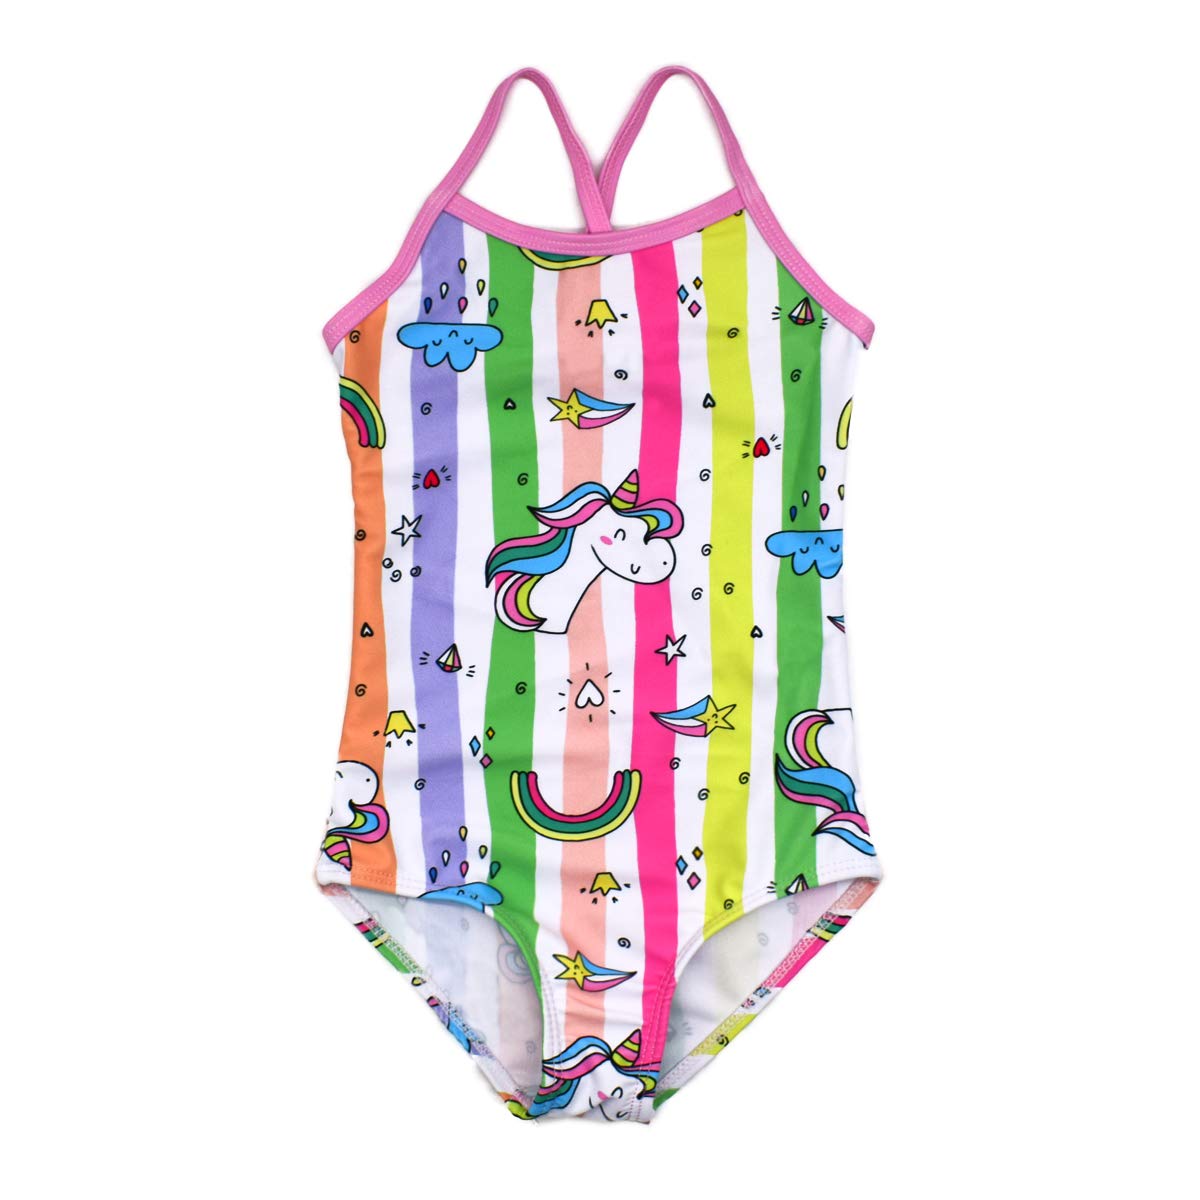 HONISEN Little Toddler girls One Pieces Swimsuit cute Swimwear Bathing Suits Unicorn 4T